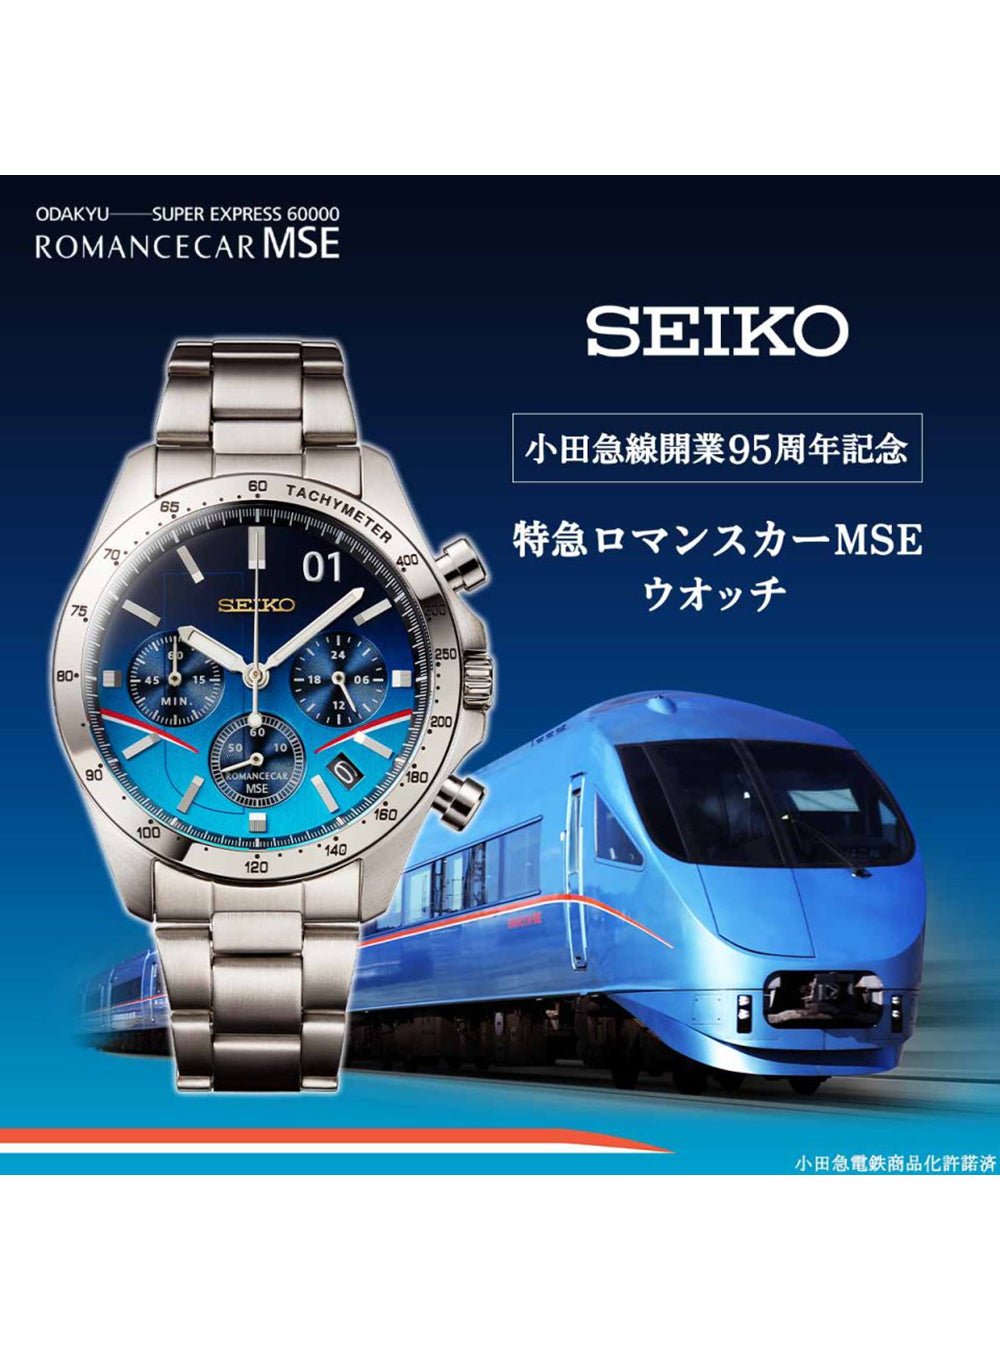 SEIKO ODAKYU SUPER EXPRESS ROMANCECAR-MSE MADE IN JAPAN LIMITED EDITIONWRISTWATCHjapan-select